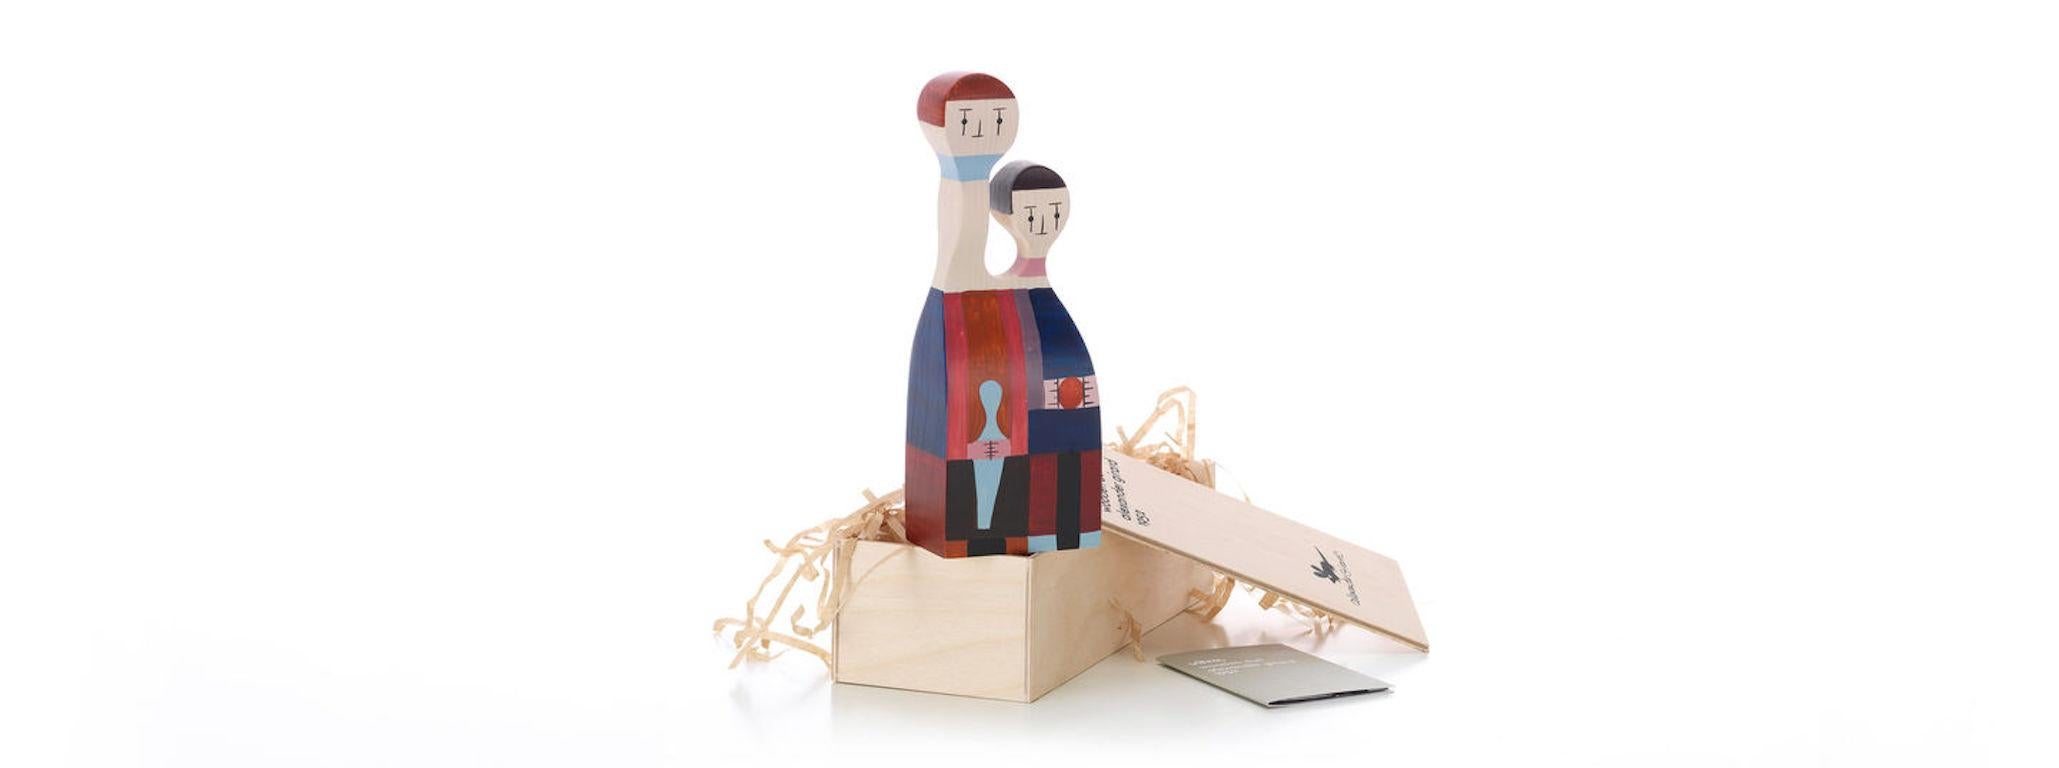 Vitra Wooden Doll No. 11 by Alexander Girard (Moderne) im Angebot